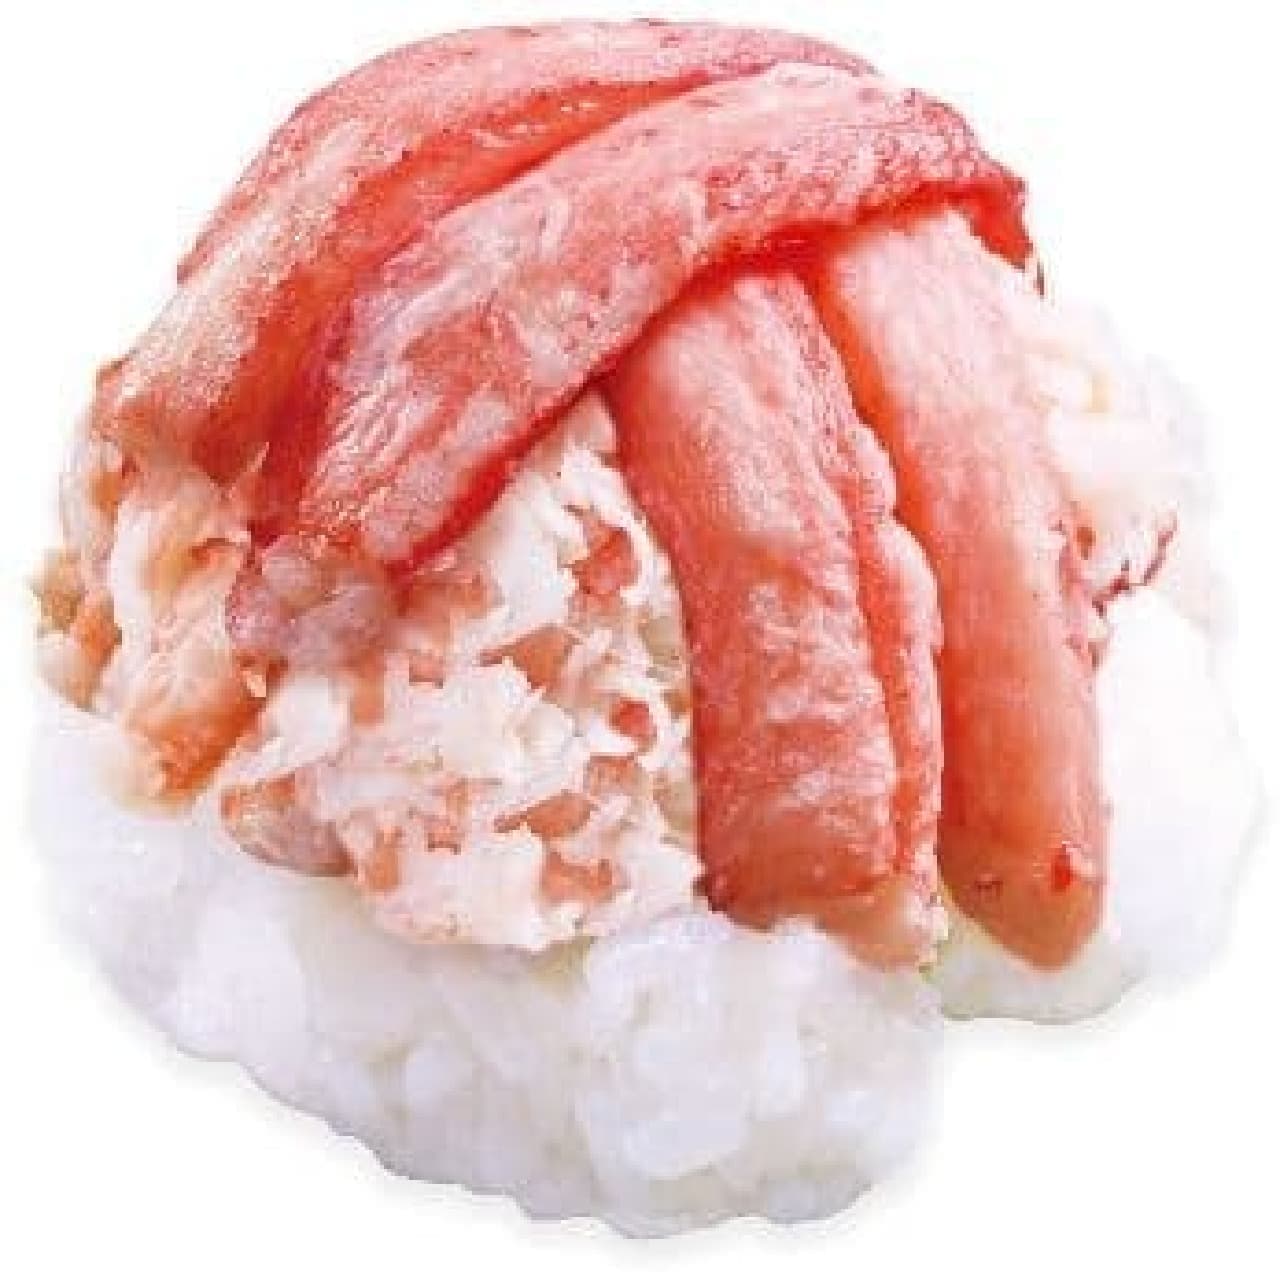 Kurazushi "Luxury Red Snow Crab Platter